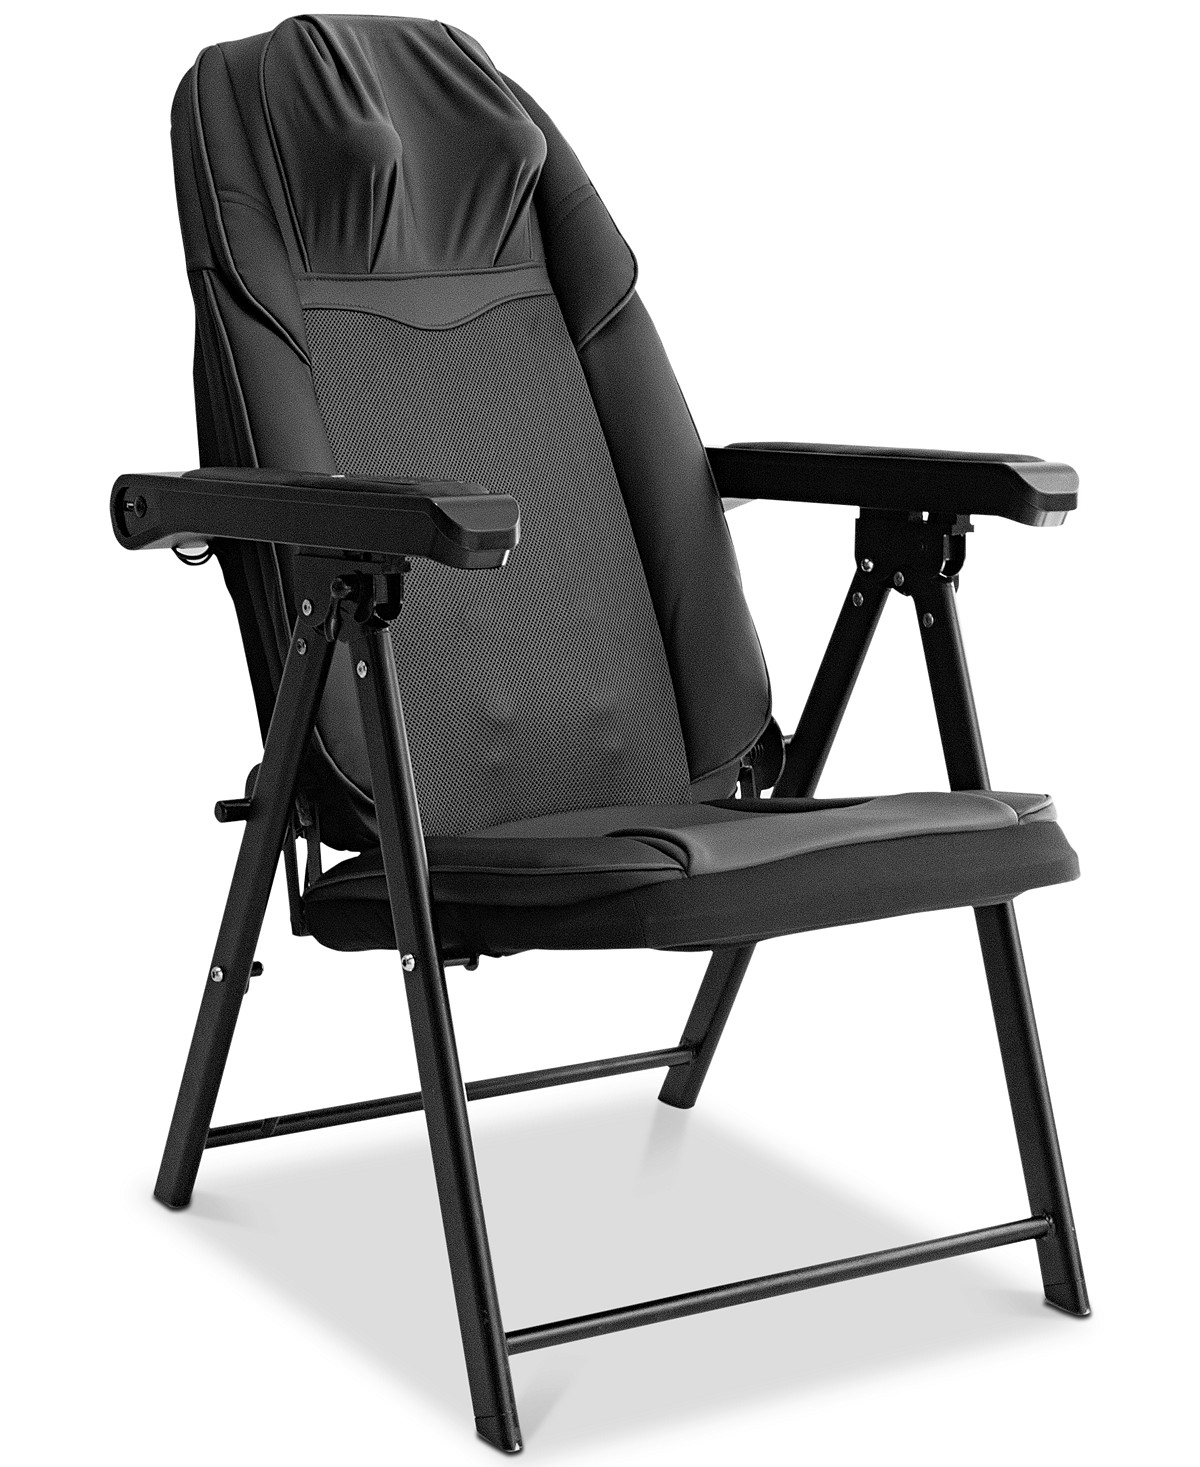 Sharper Image Foldable Shiatsu Massage Chair Only $199.93 Shipped